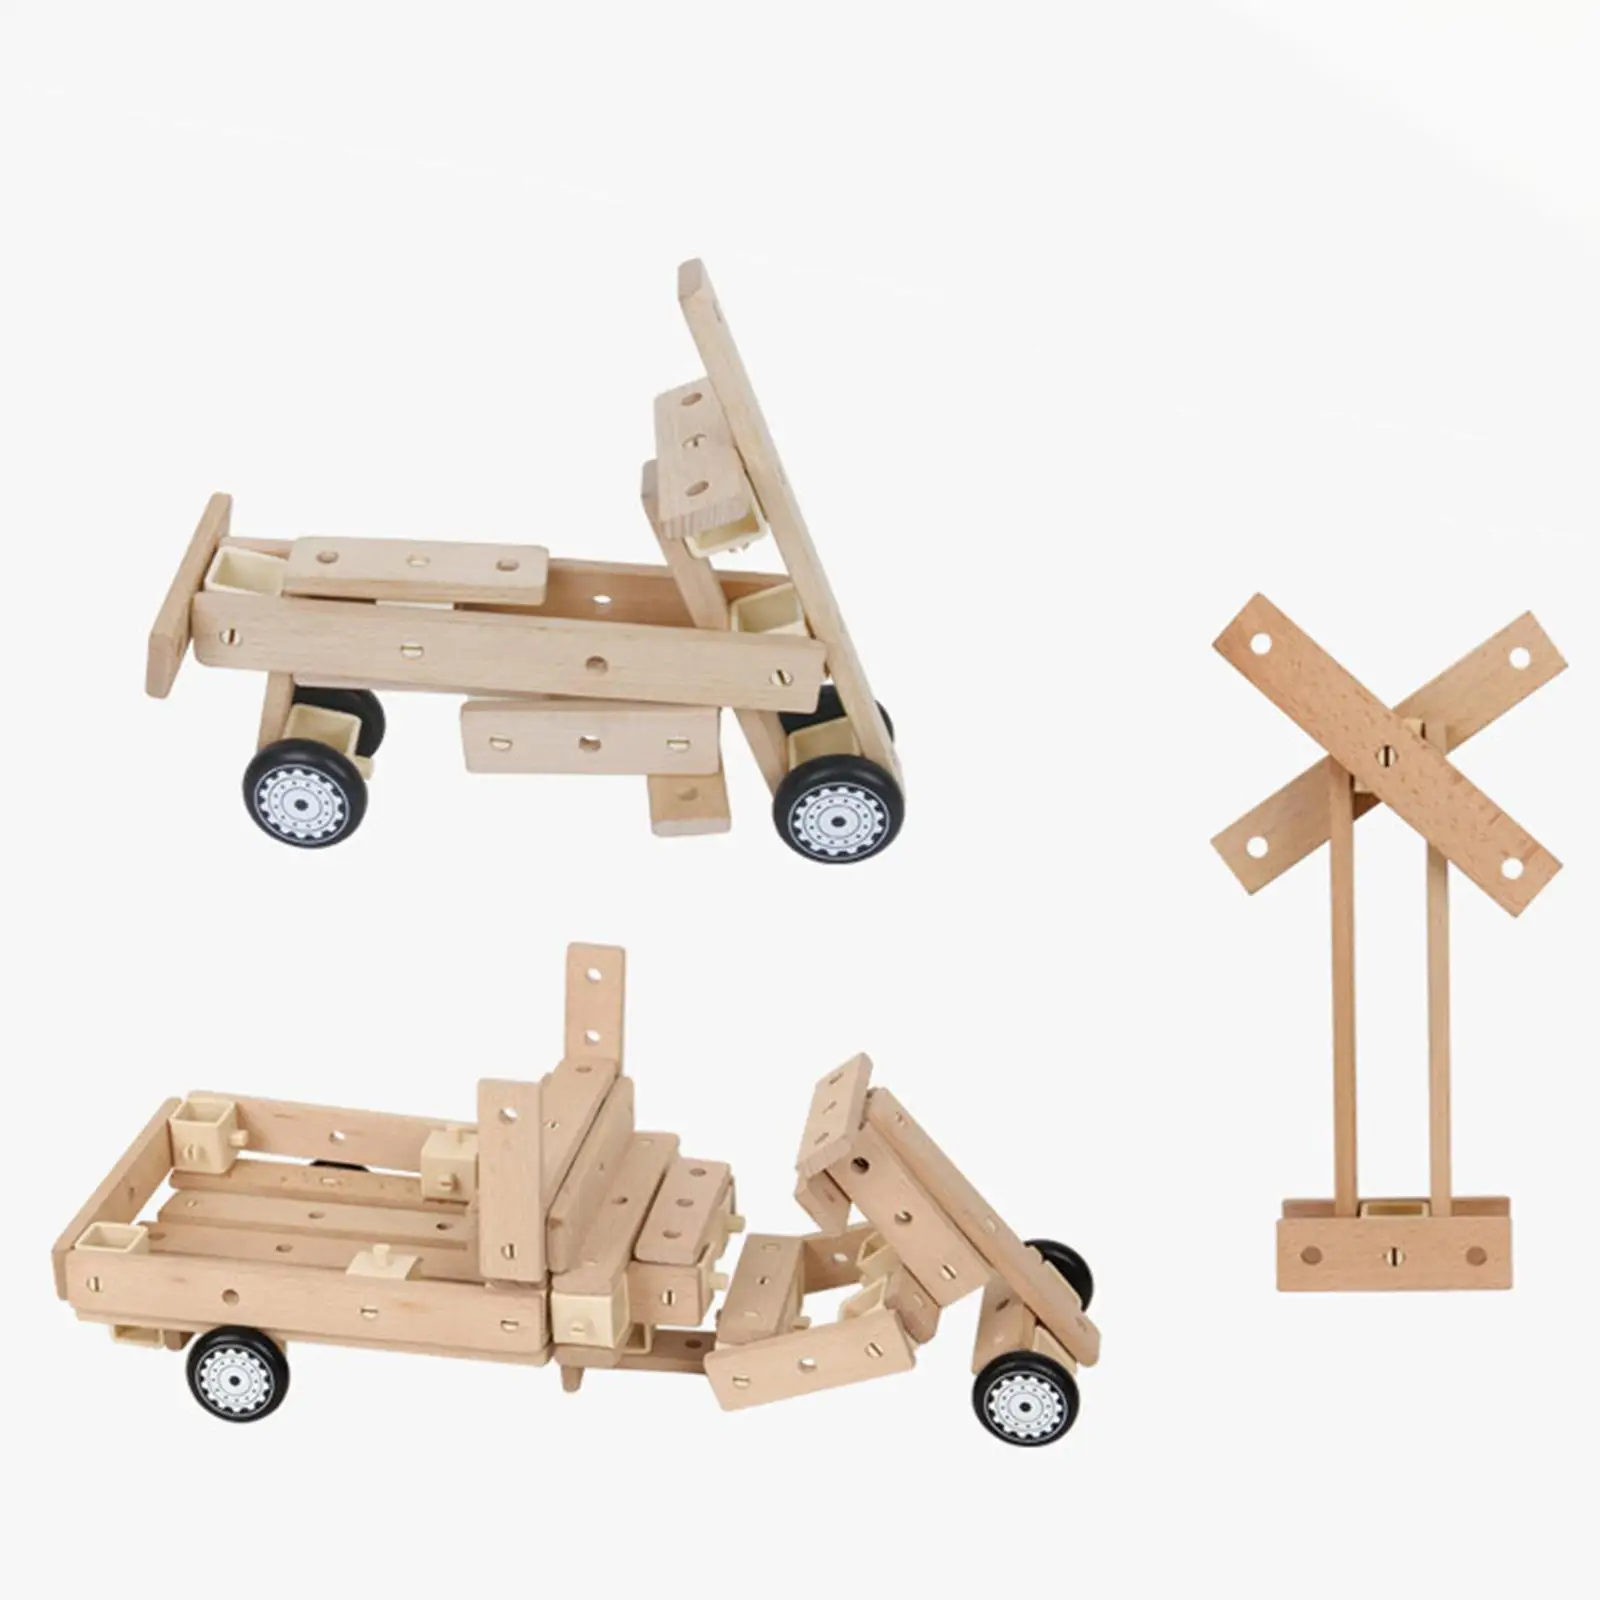 Wooden Building Blocks Set Wood Planks Set Kindergarten Wooden Building Kit